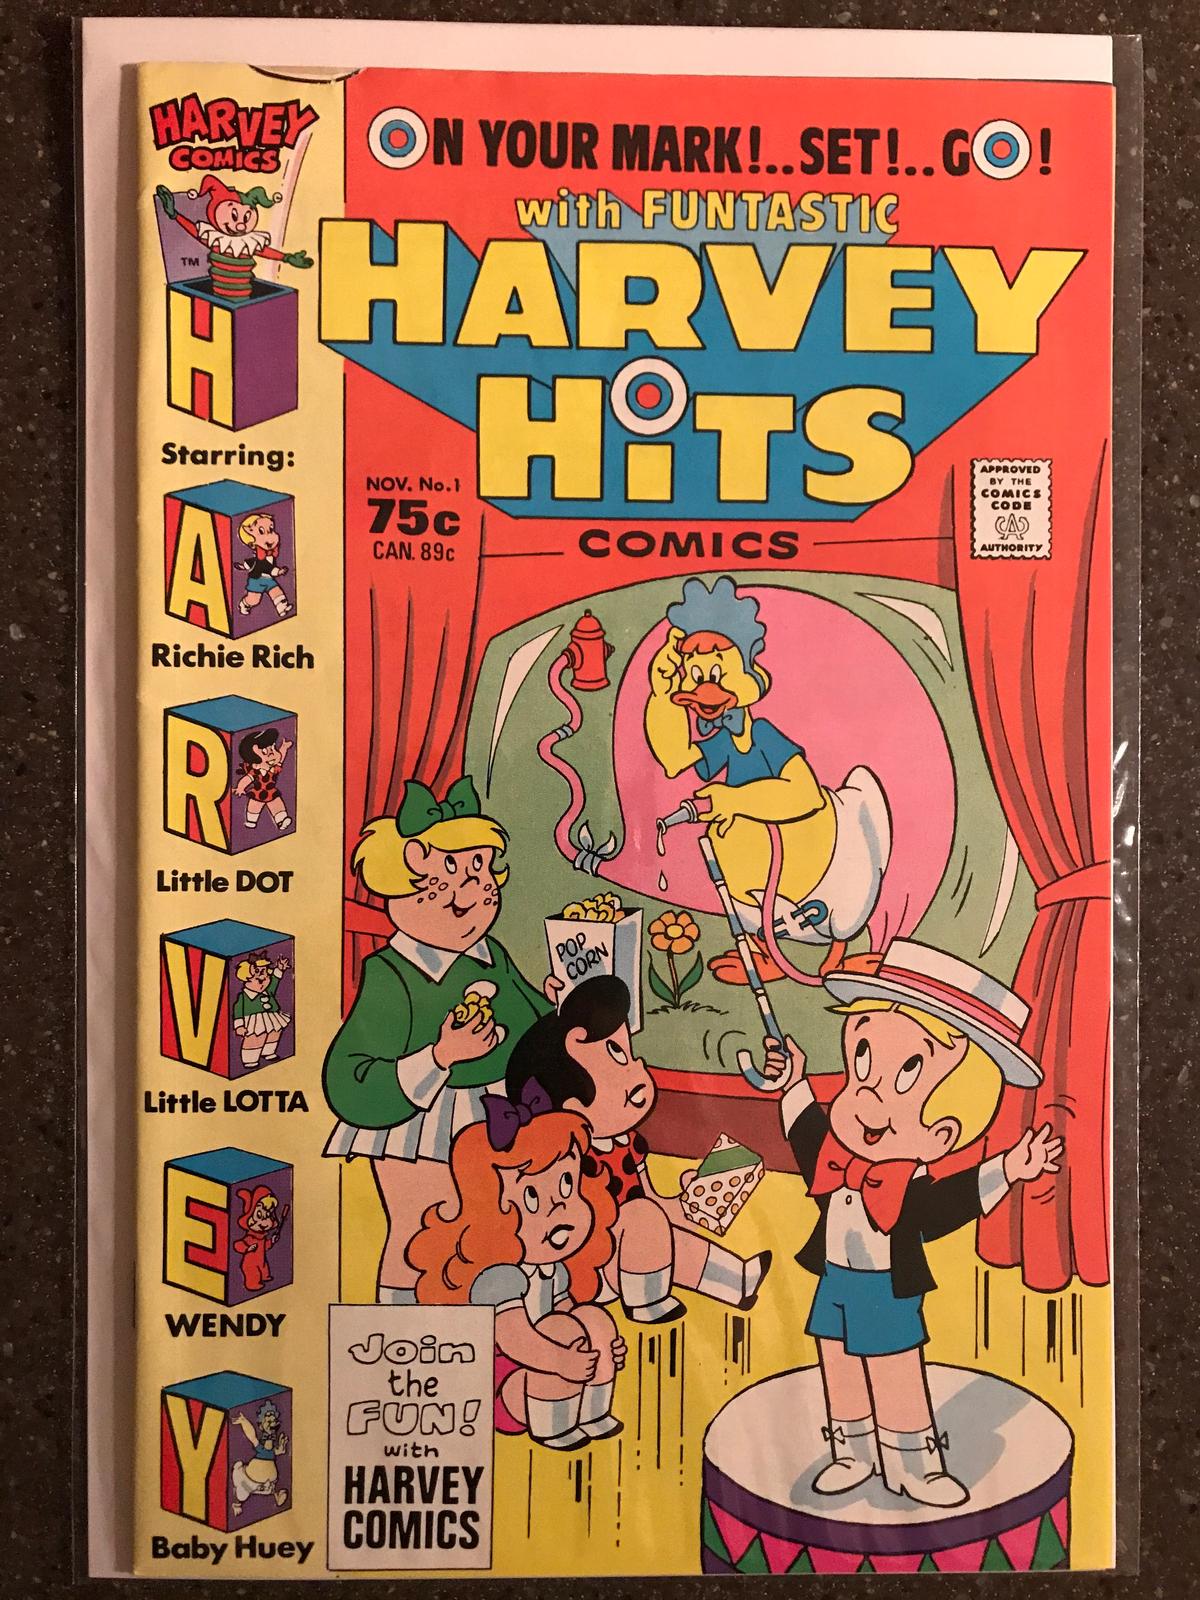 Harvey Hits Comics #1 Harvey Comics Starring Richie Rich Wendy Little Dot Little Lotta